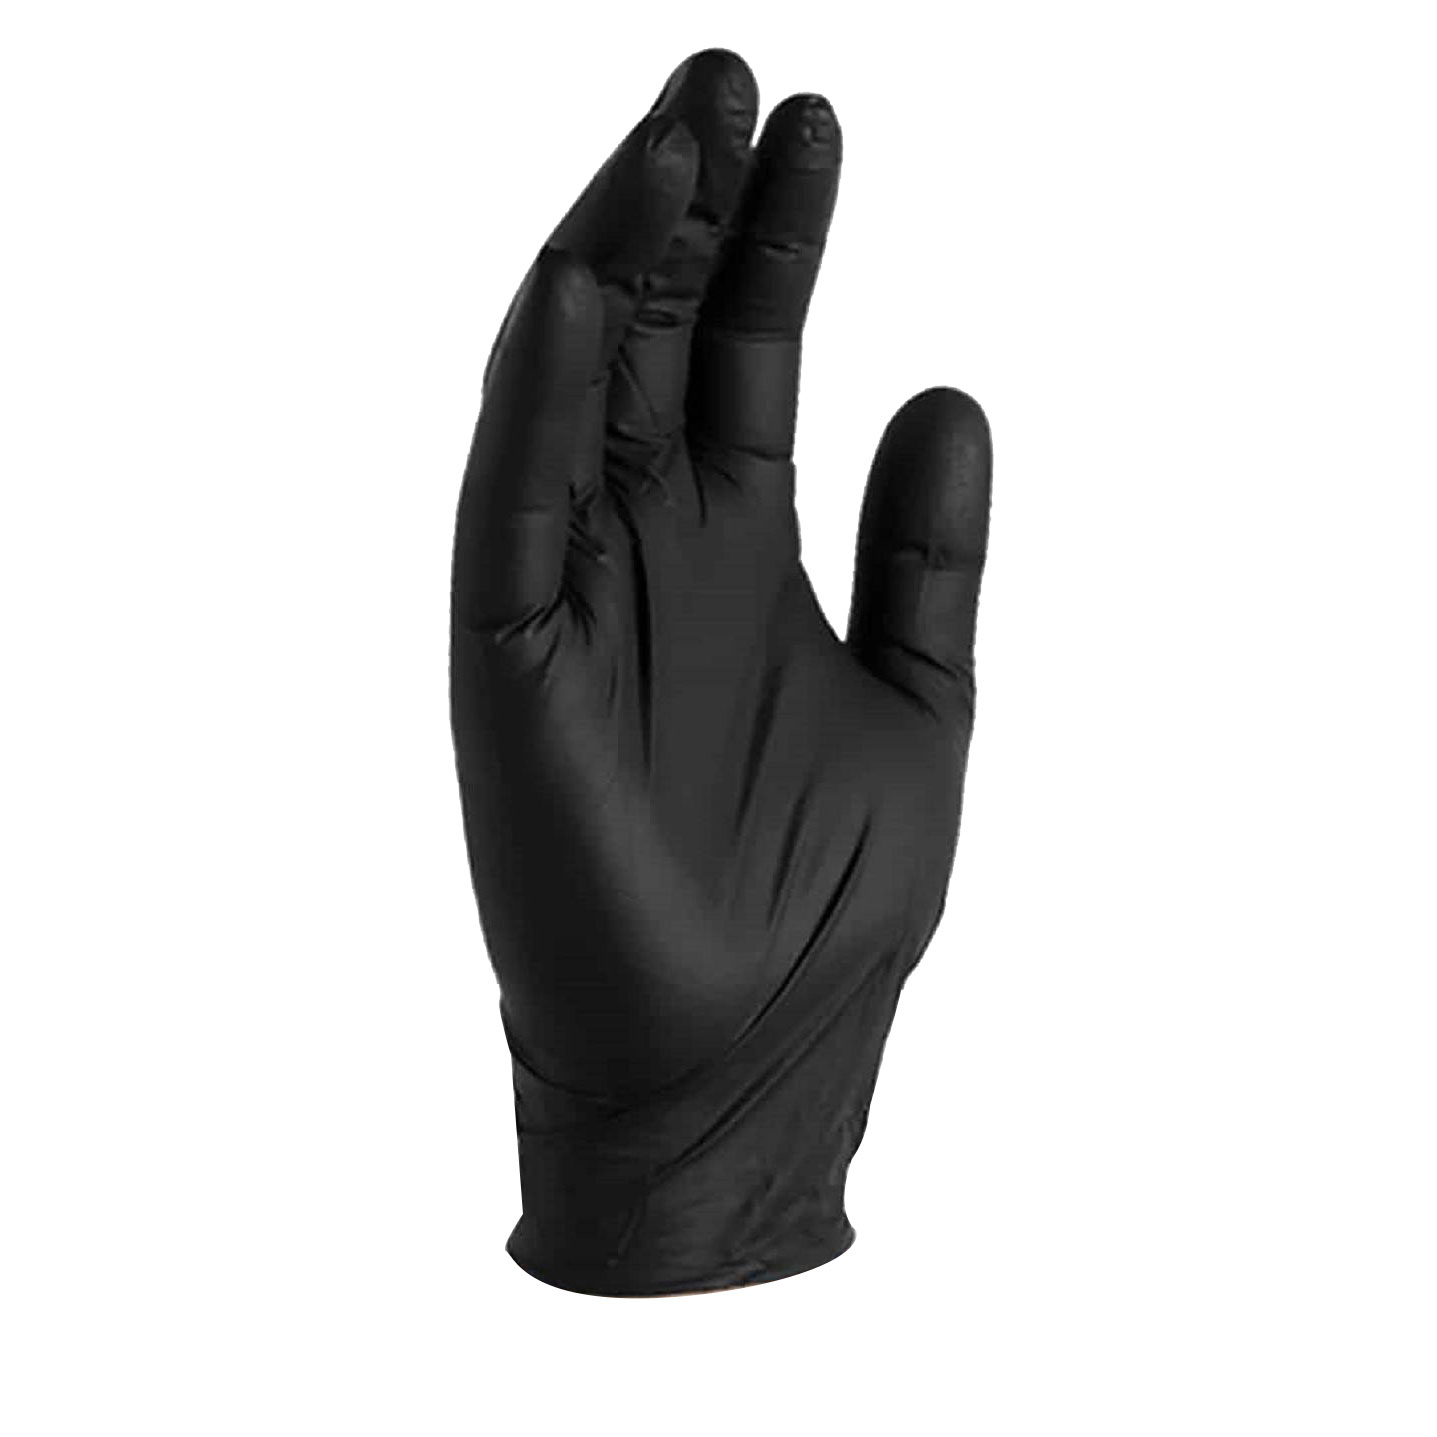 Gloveworks Nitrile Work Gloves, Black, XLarge, 100/Box